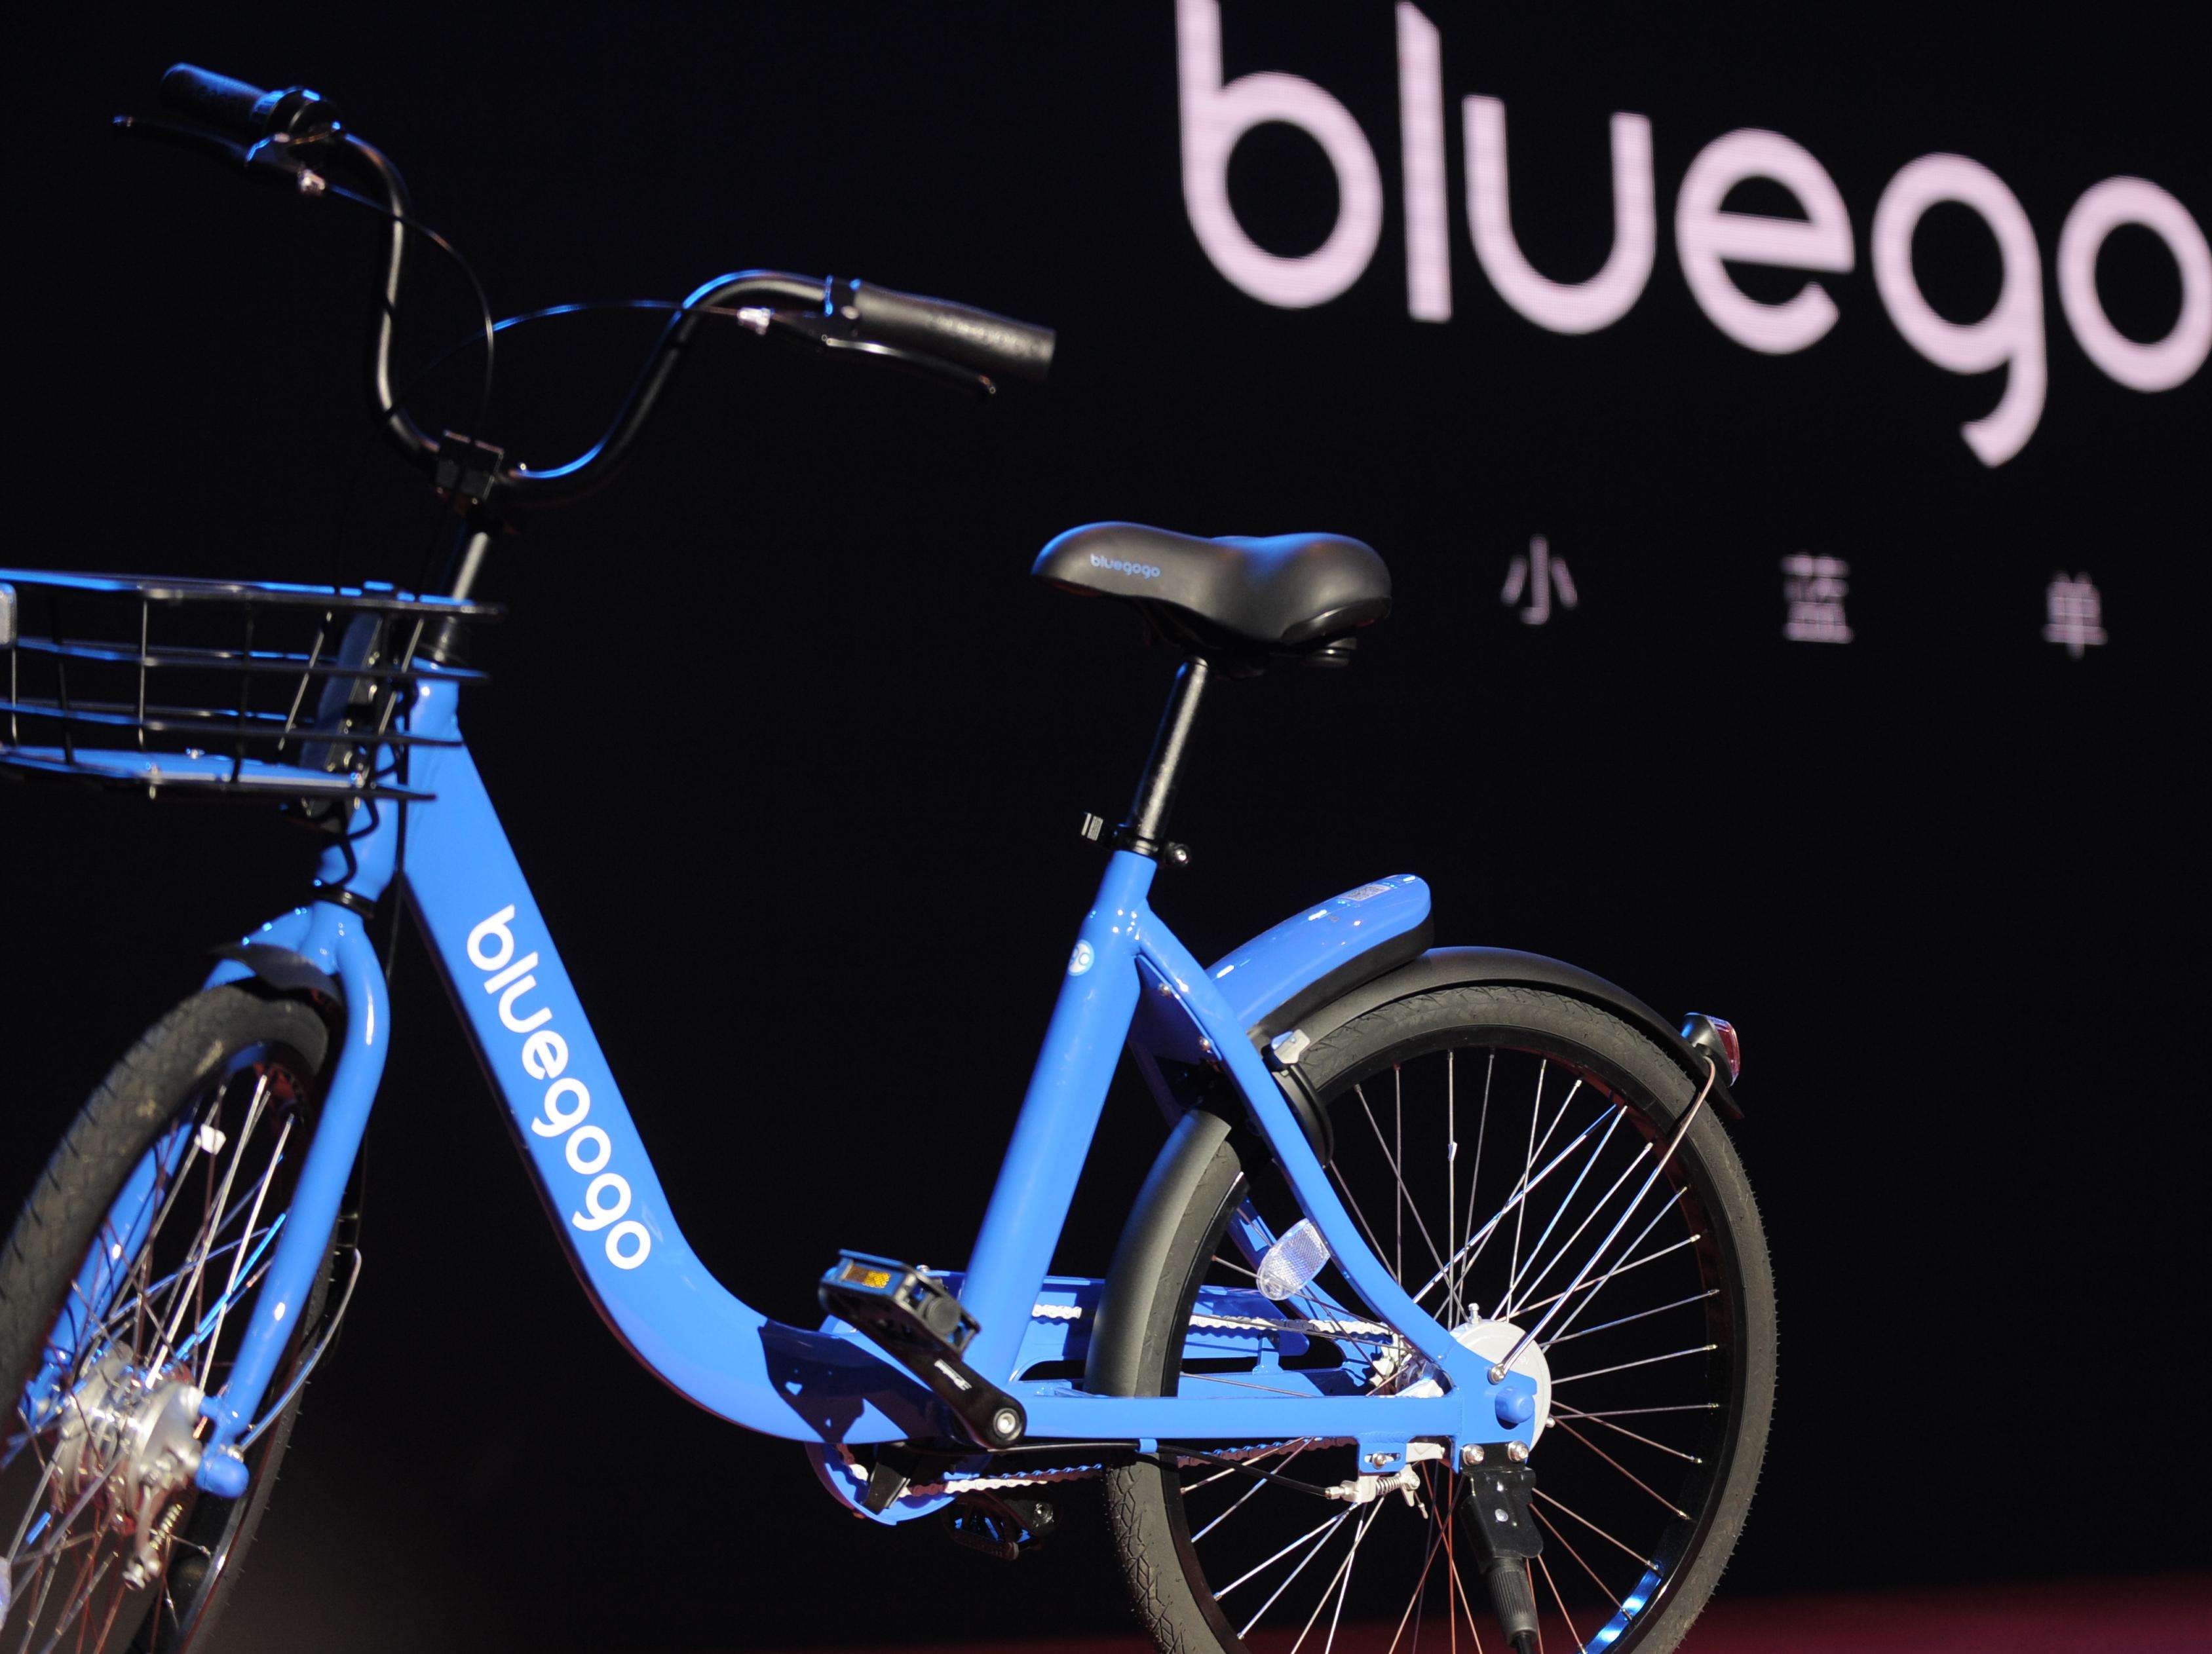 Chinese bike-sharing firm Bluegogo has gone bankrupt: media reports